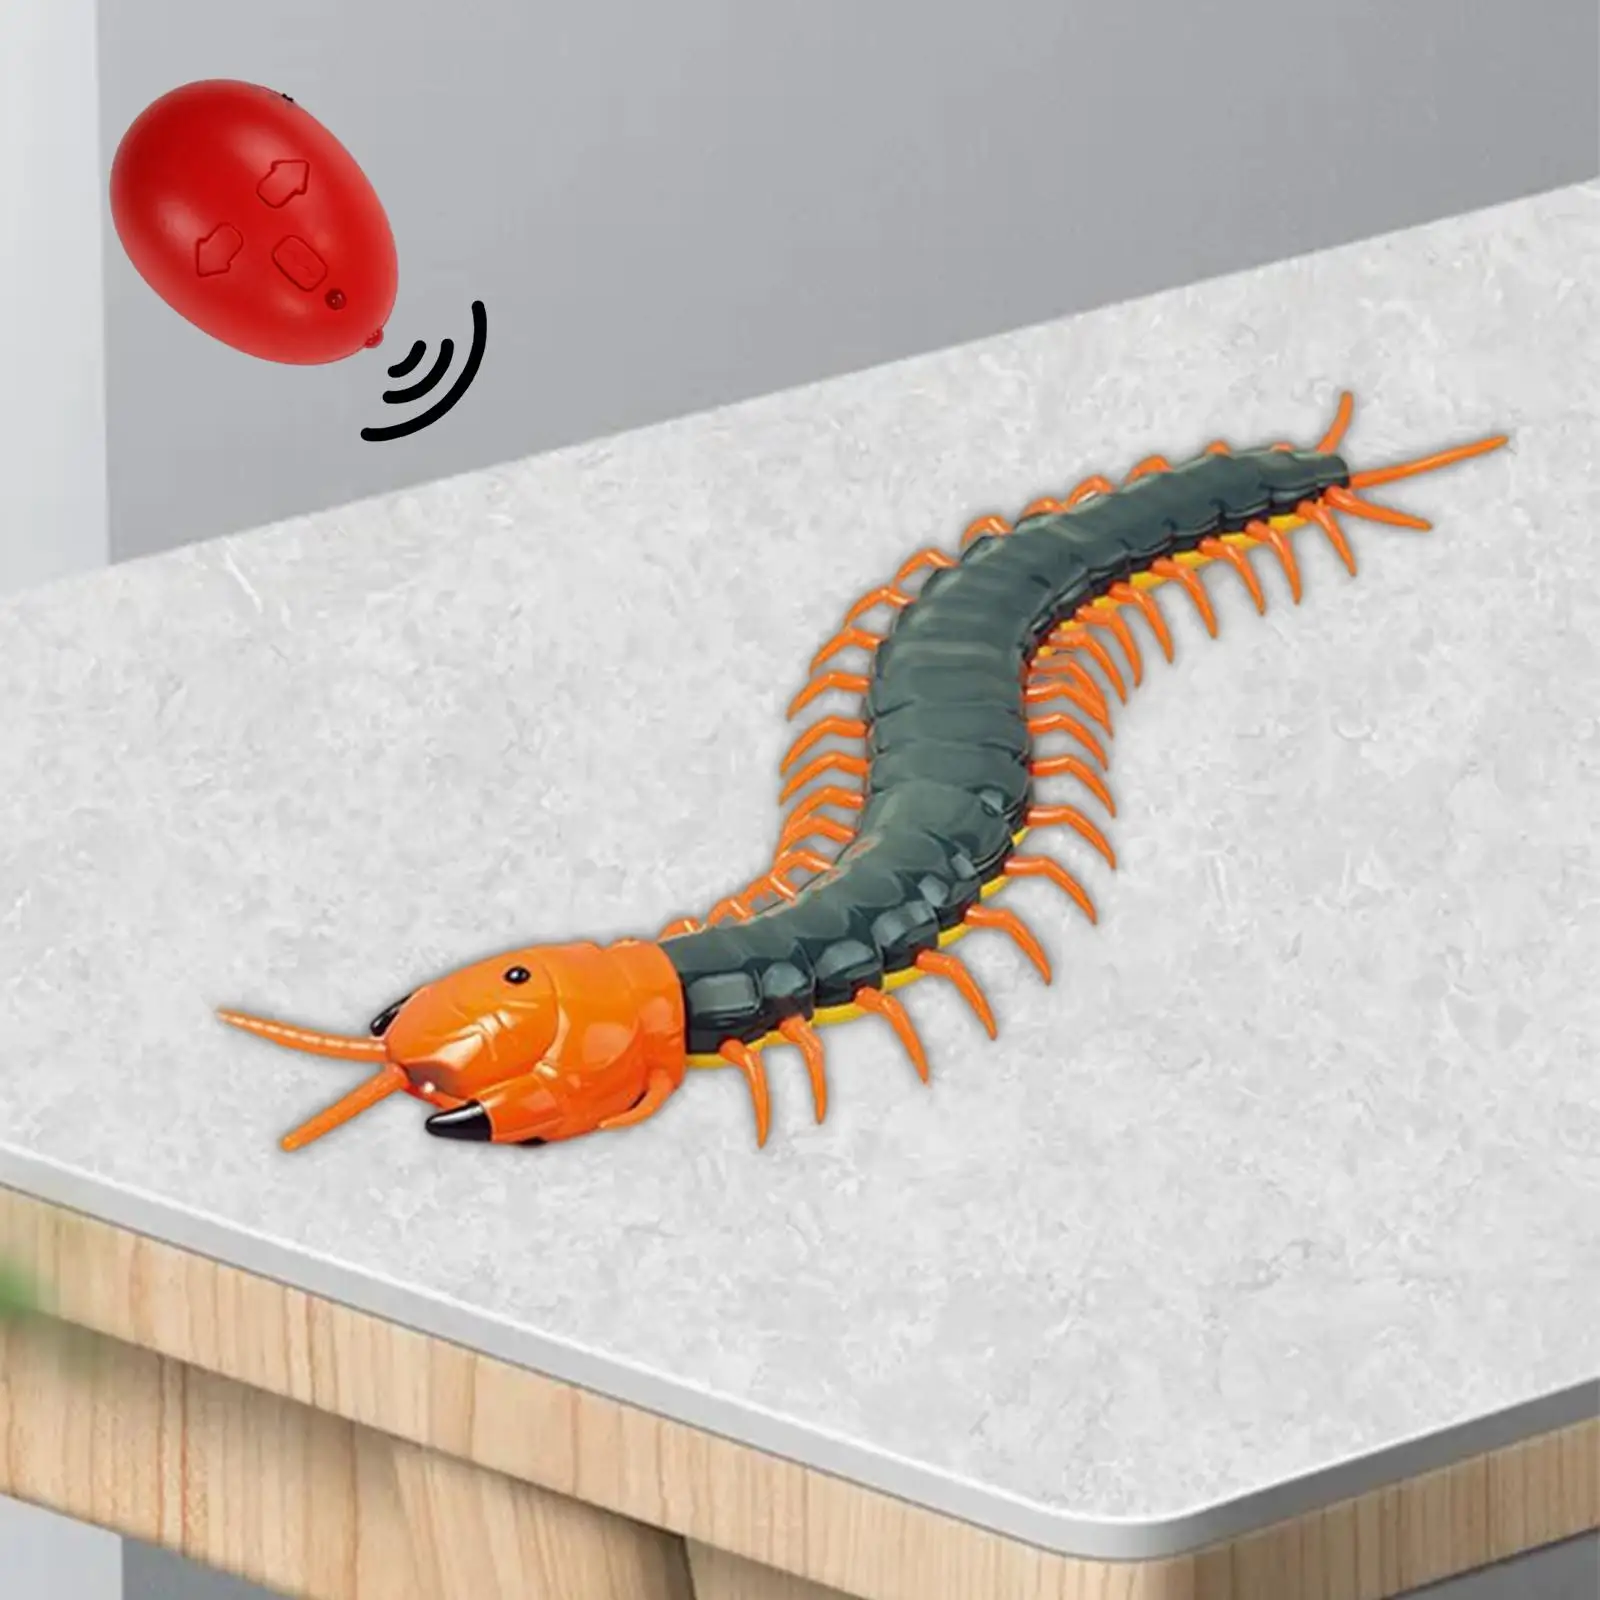 Smart Remote Control Centipede Centipede Toys Cat Interactive April Fools` Day Trick Electric Centipede Toy for Children